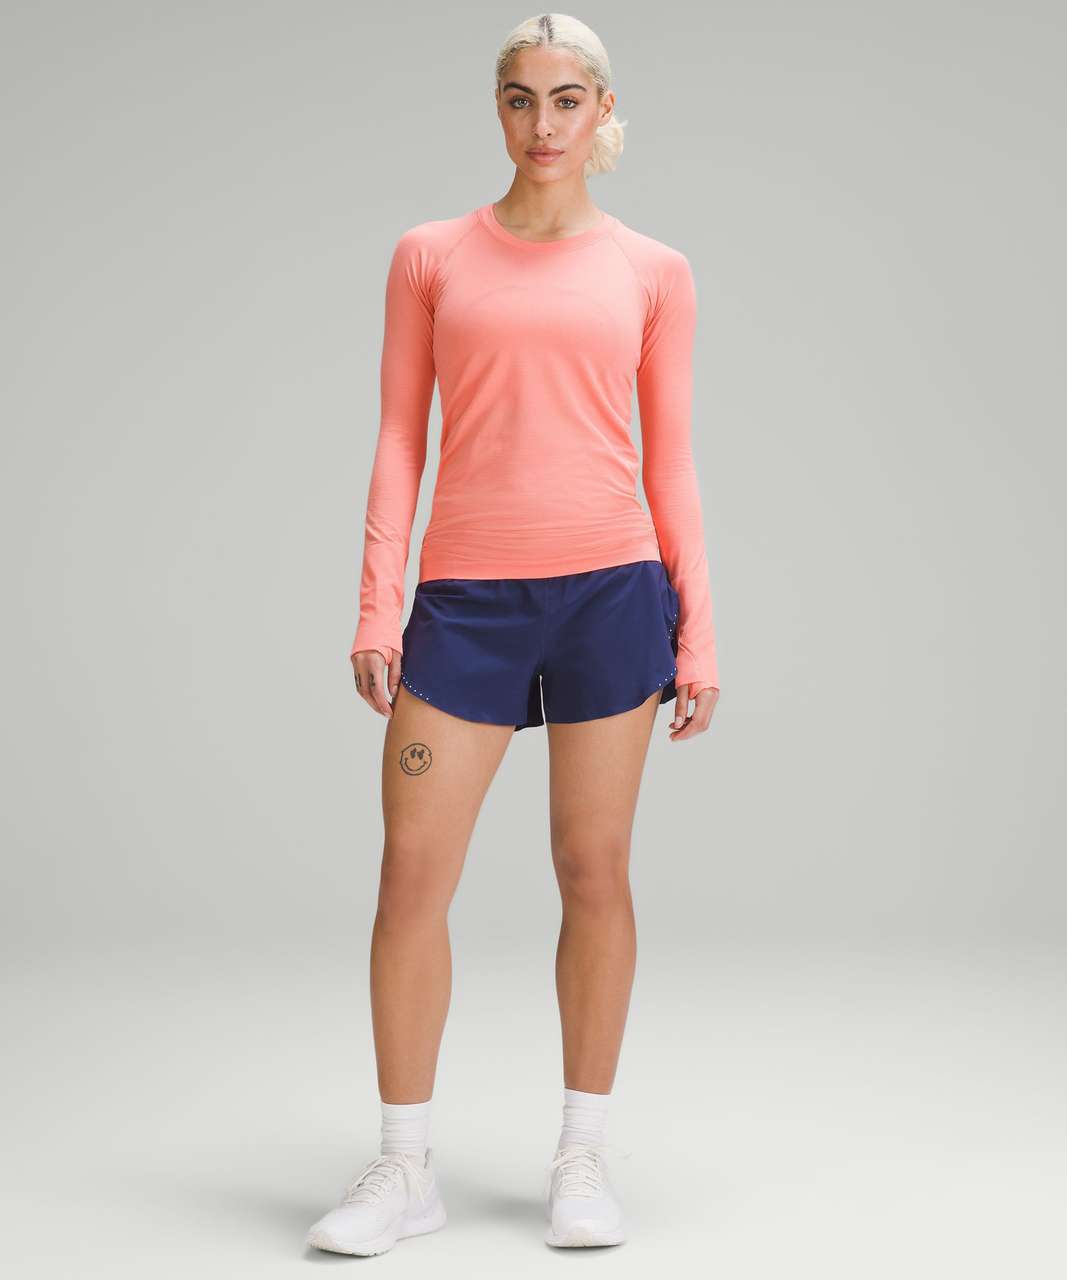 Lululemon Swiftly Tech Long-Sleeve Shirt 2.0 - Sunny Coral / Sunny Coral